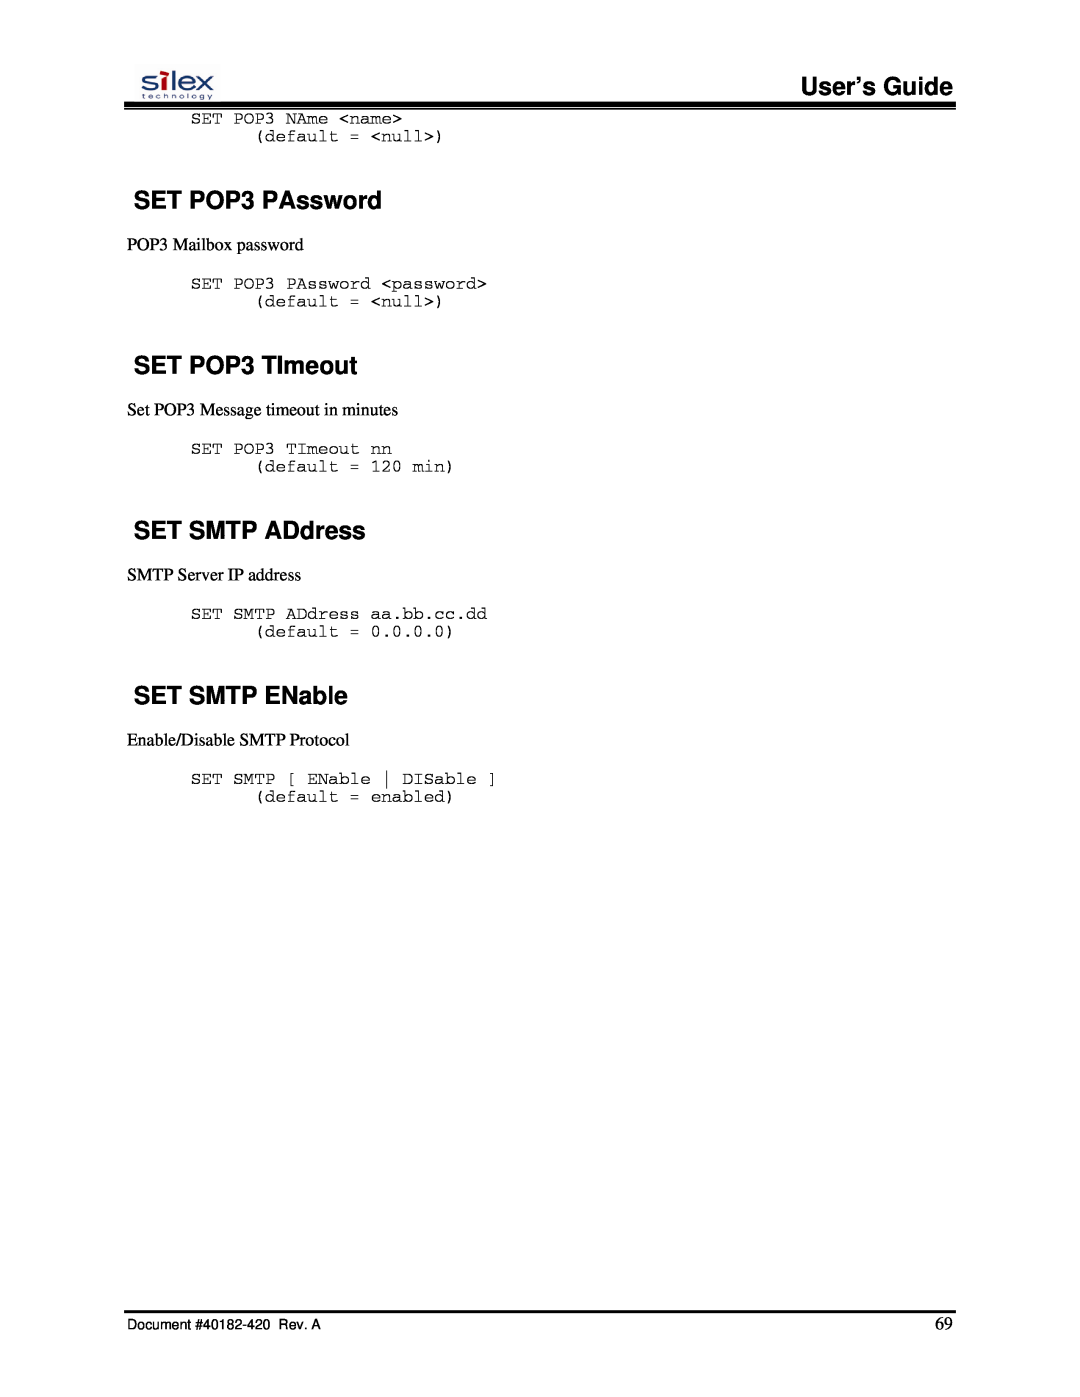 Silex technology SX-200 user manual SET POP3 PAssword, SET POP3 TImeout, SET SMTP ADdress, SET SMTP ENable, User’s Guide 